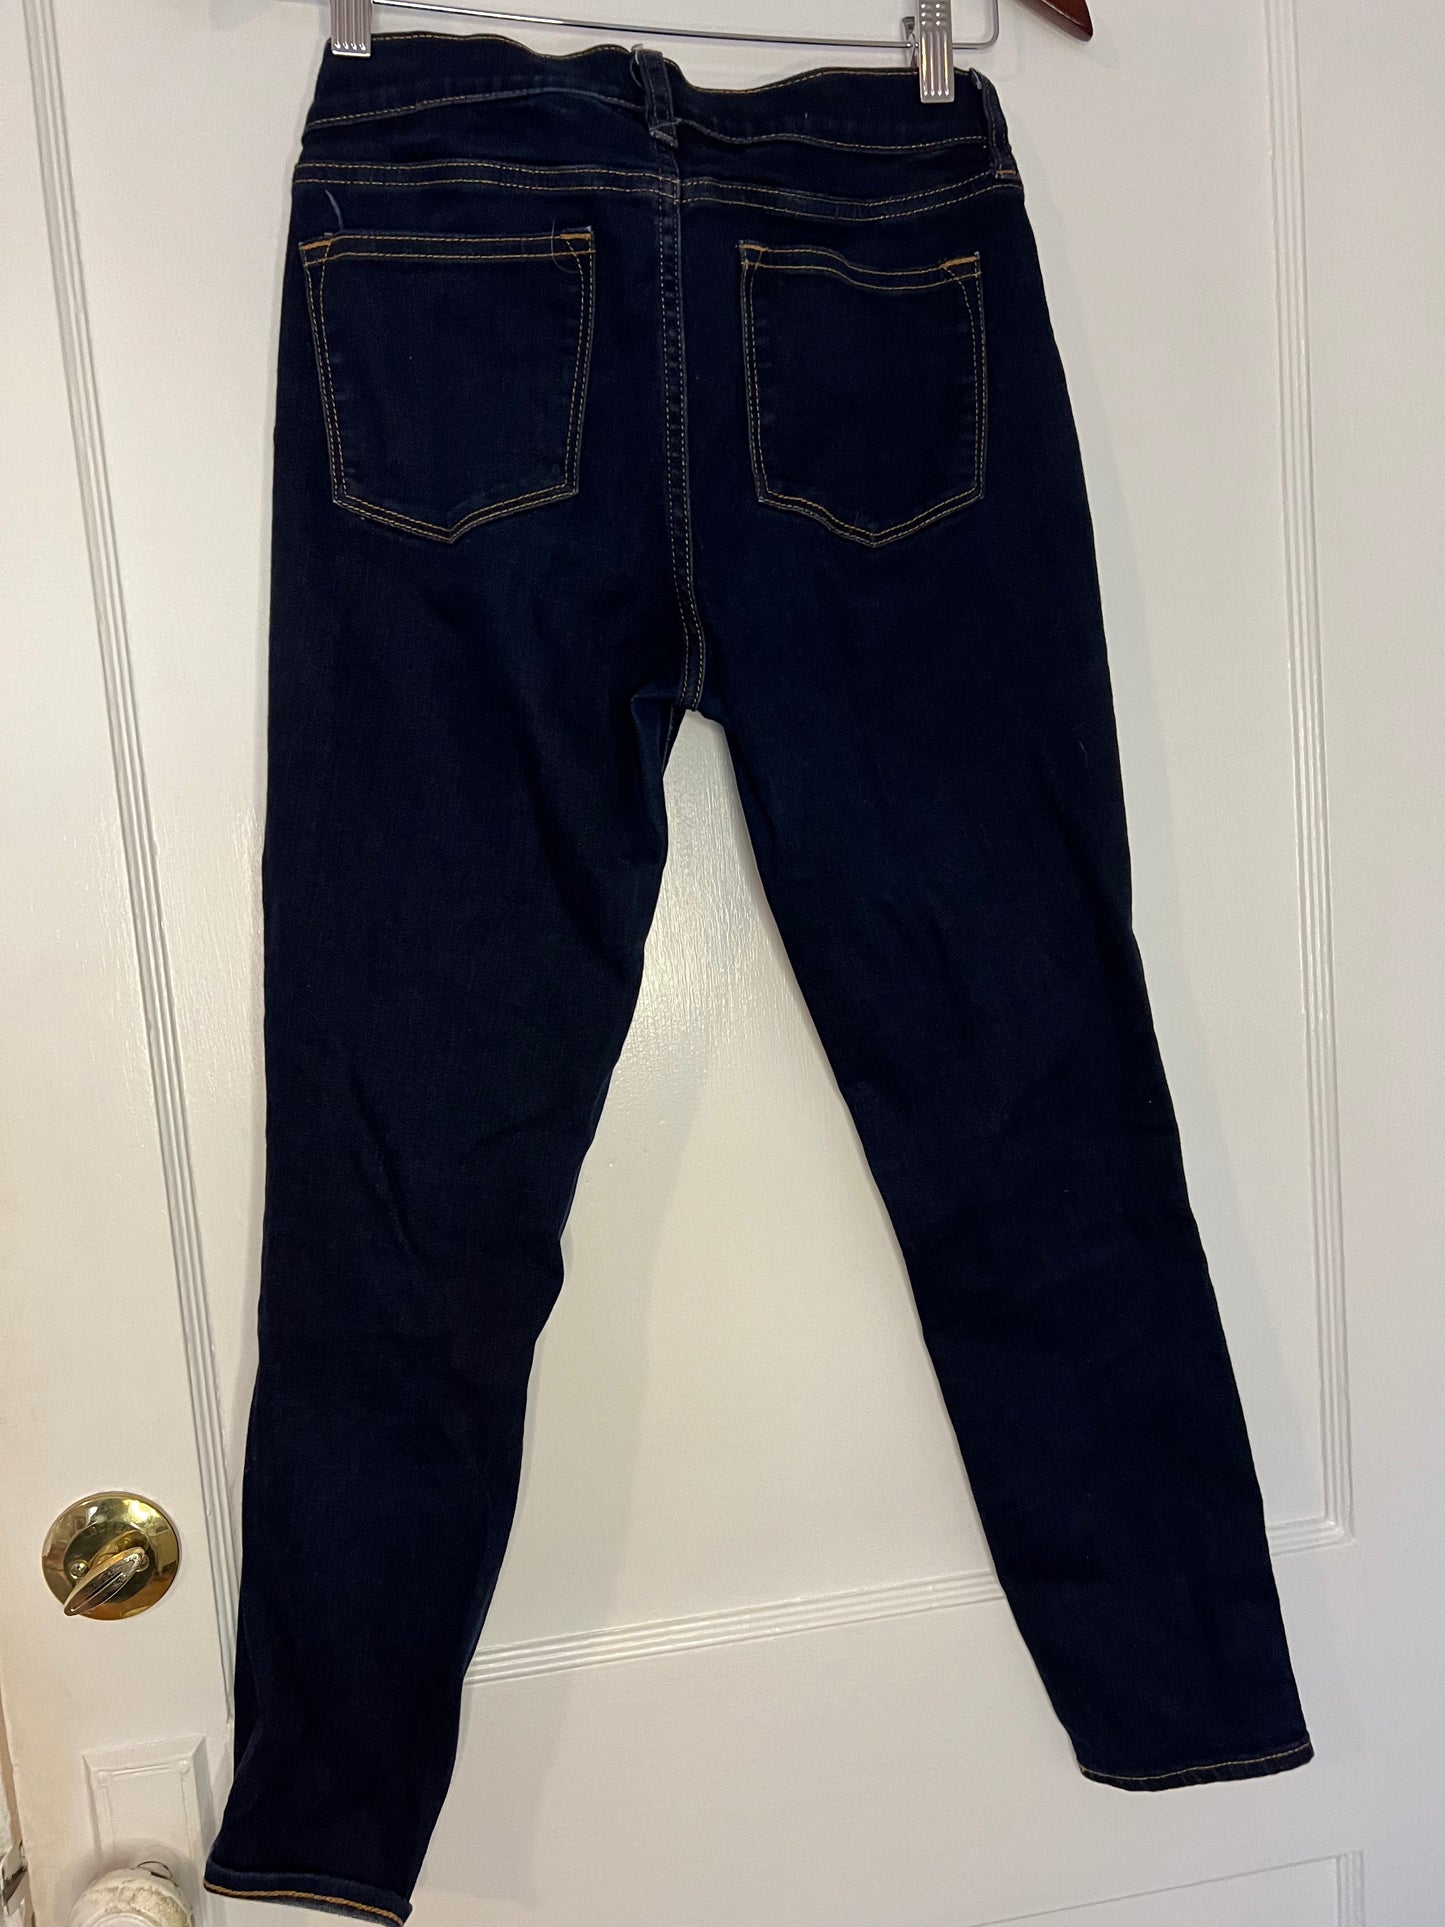 JCrew Blue Dark Wash Denim Jeans Size 26 EUC PPU 45208 or SCO Spring Sale